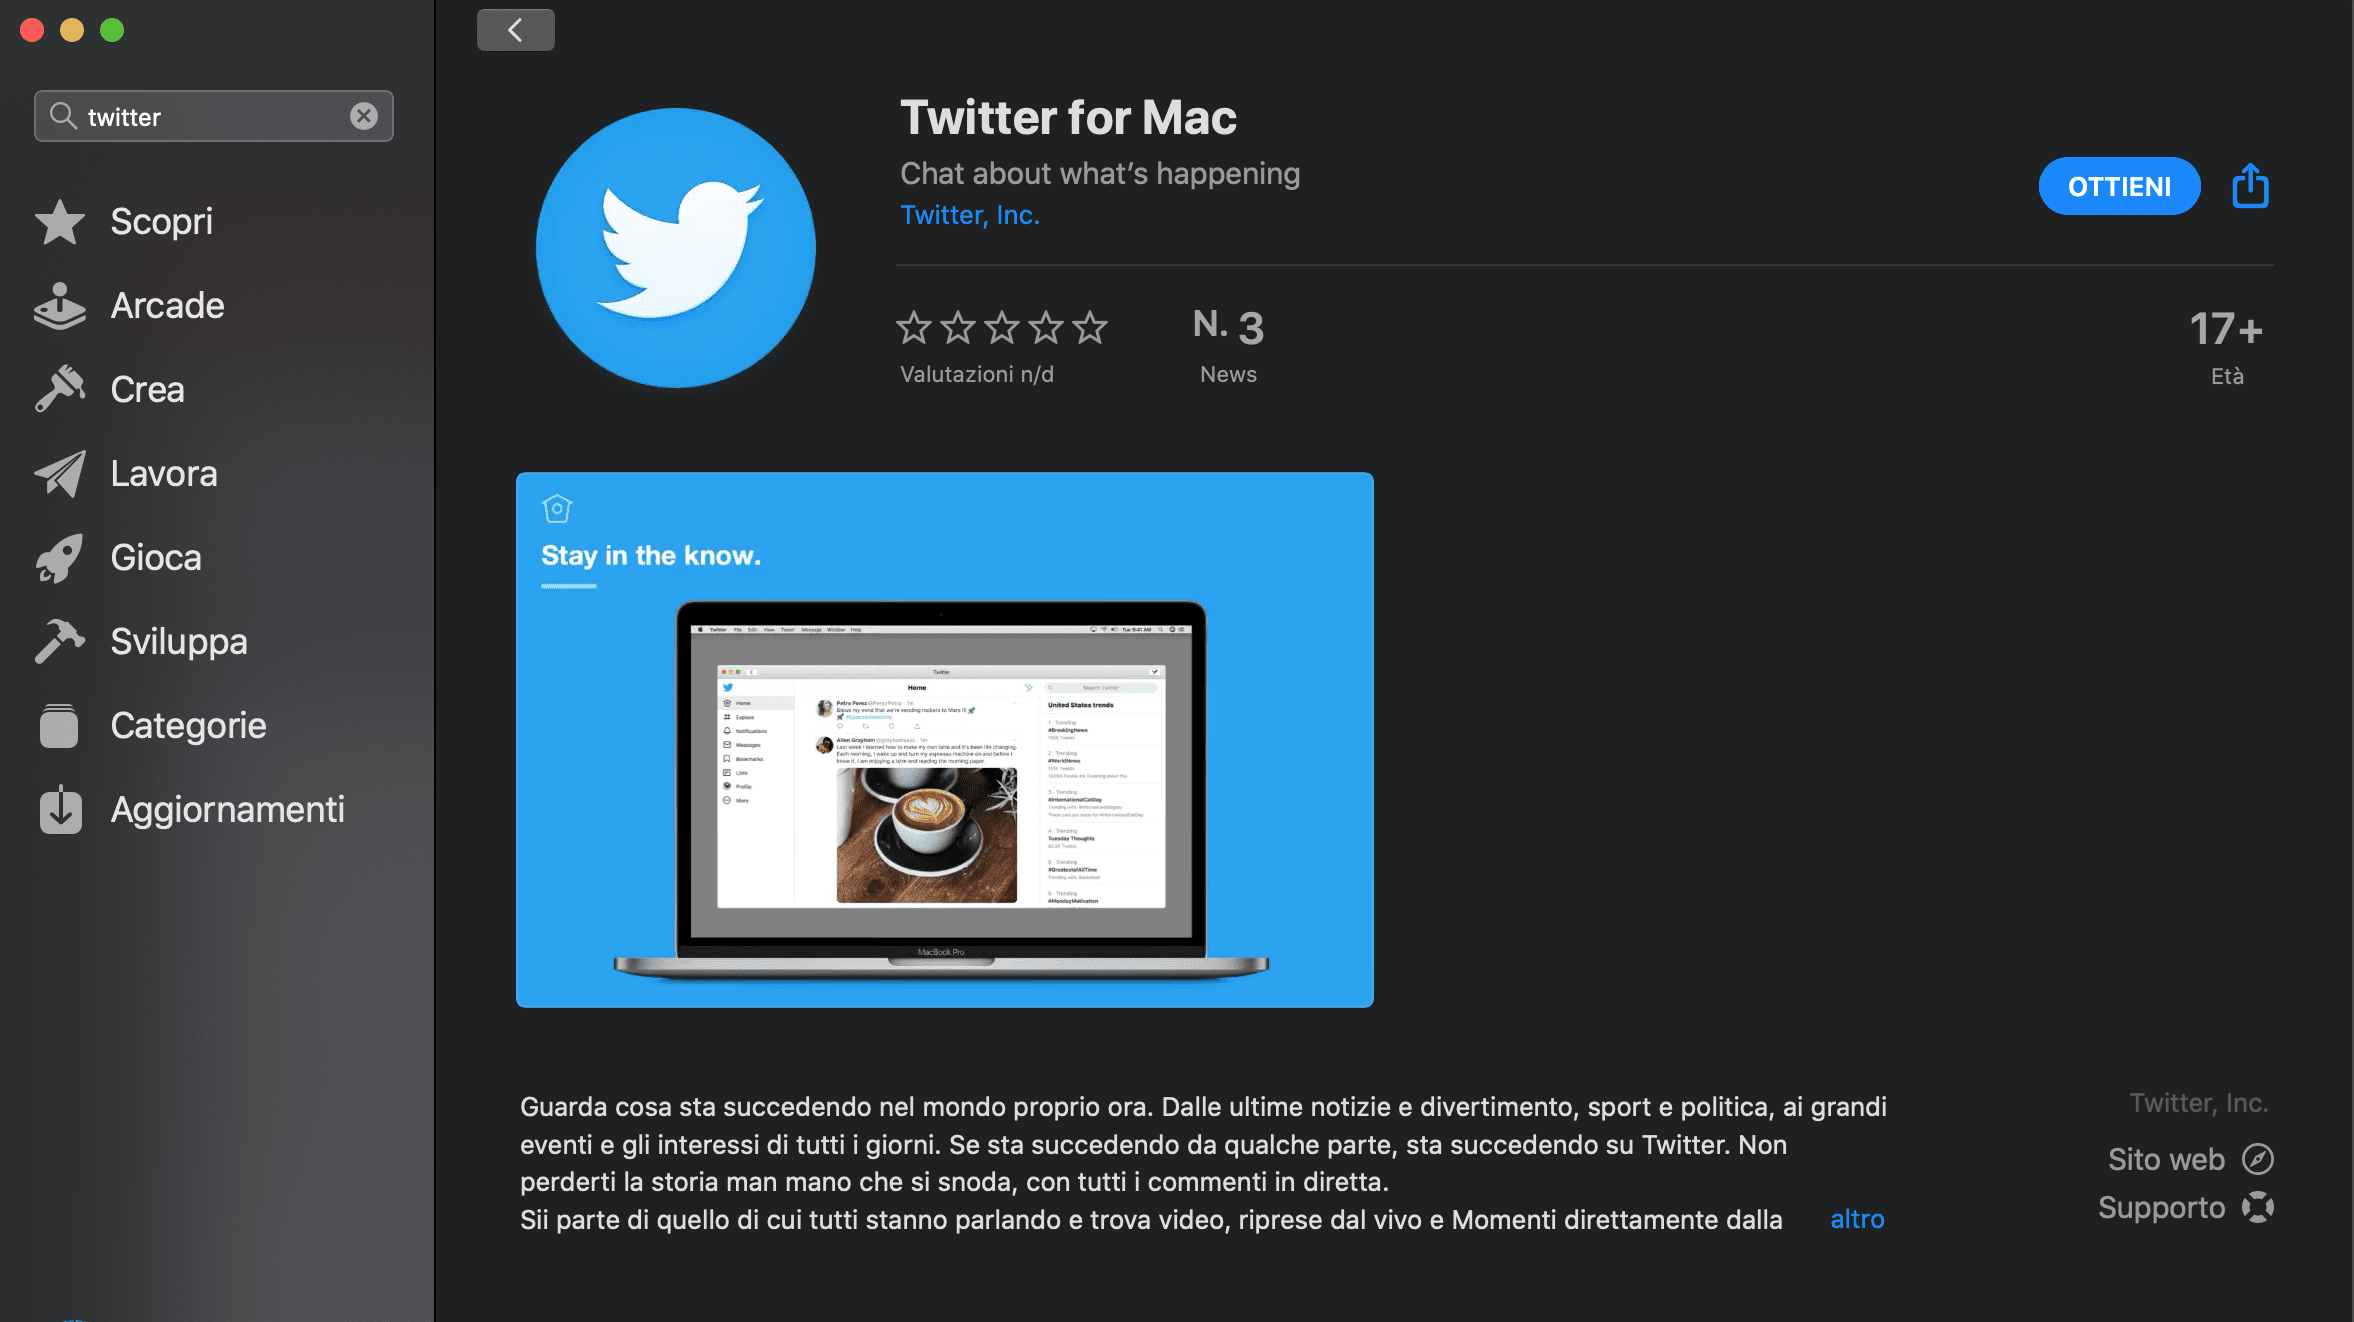 Twitter for Mac